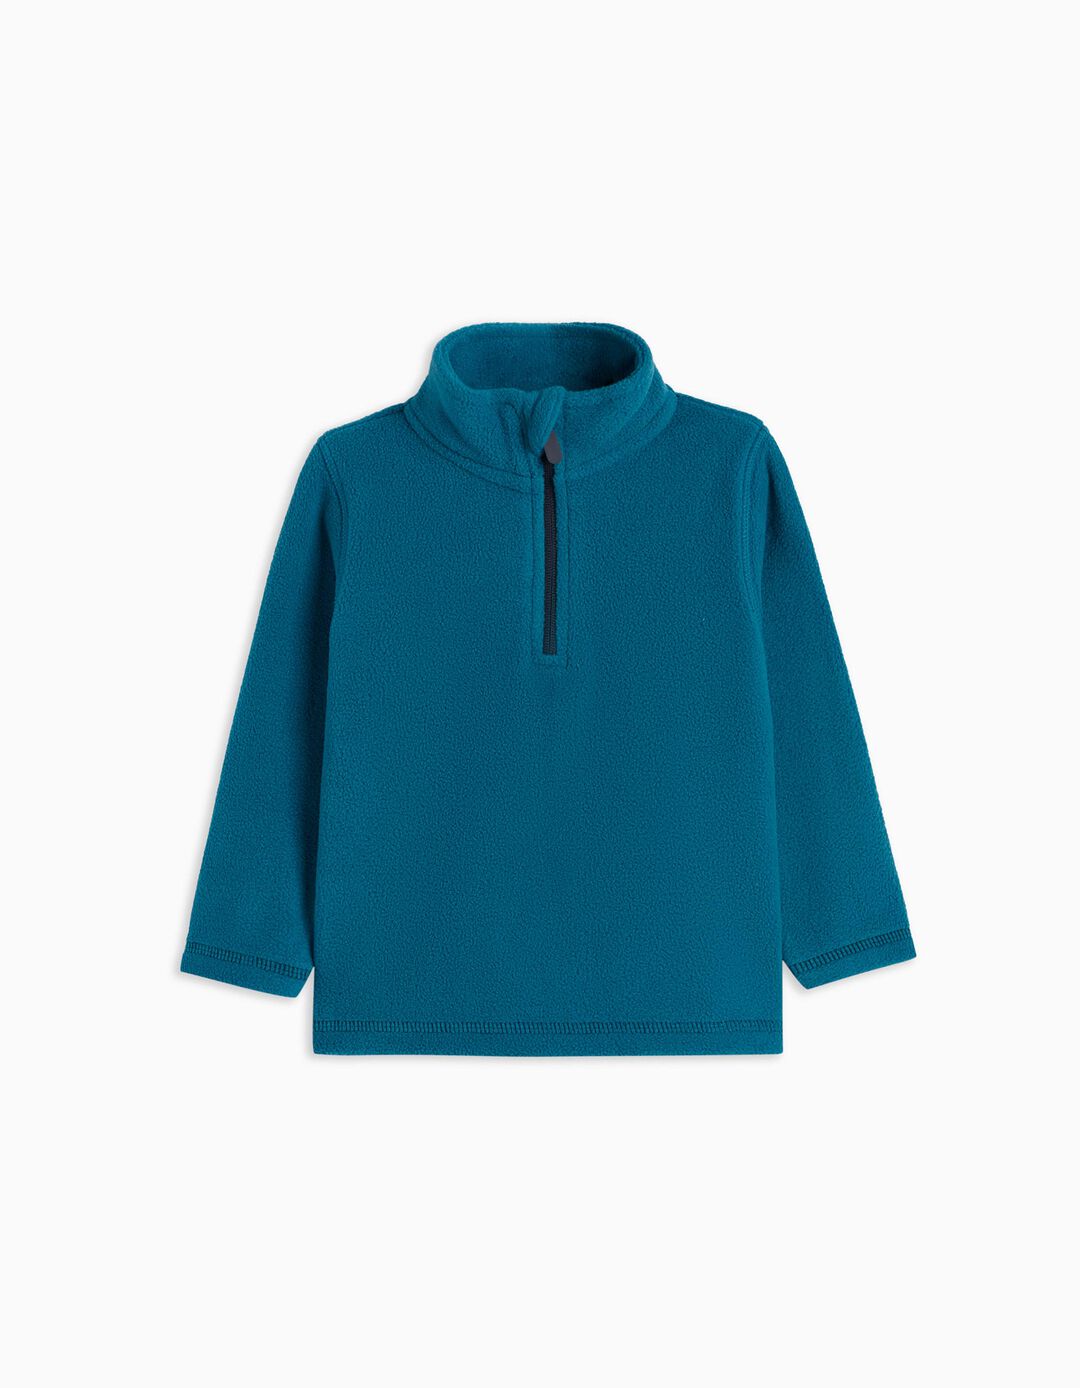 Sweatshirt Polar com Fecho, Bebé Menino, Azul